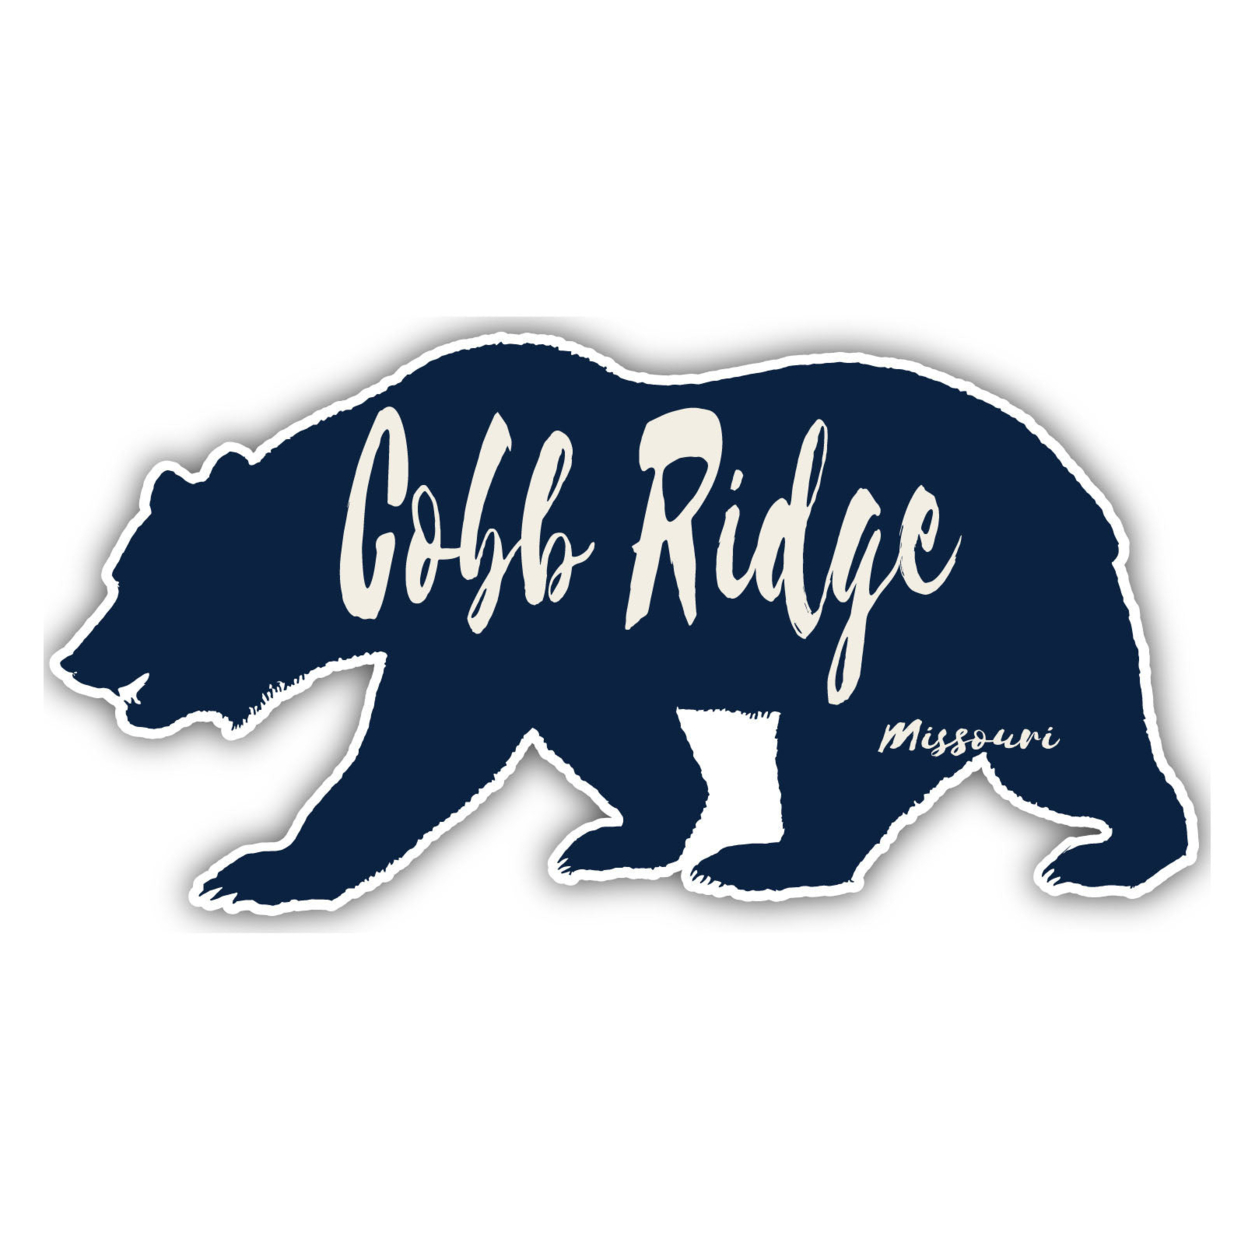 Cobb Ridge Missouri Souvenir Decorative Stickers (Choose Theme And Size) - 4-Pack, 8-Inch, Bear